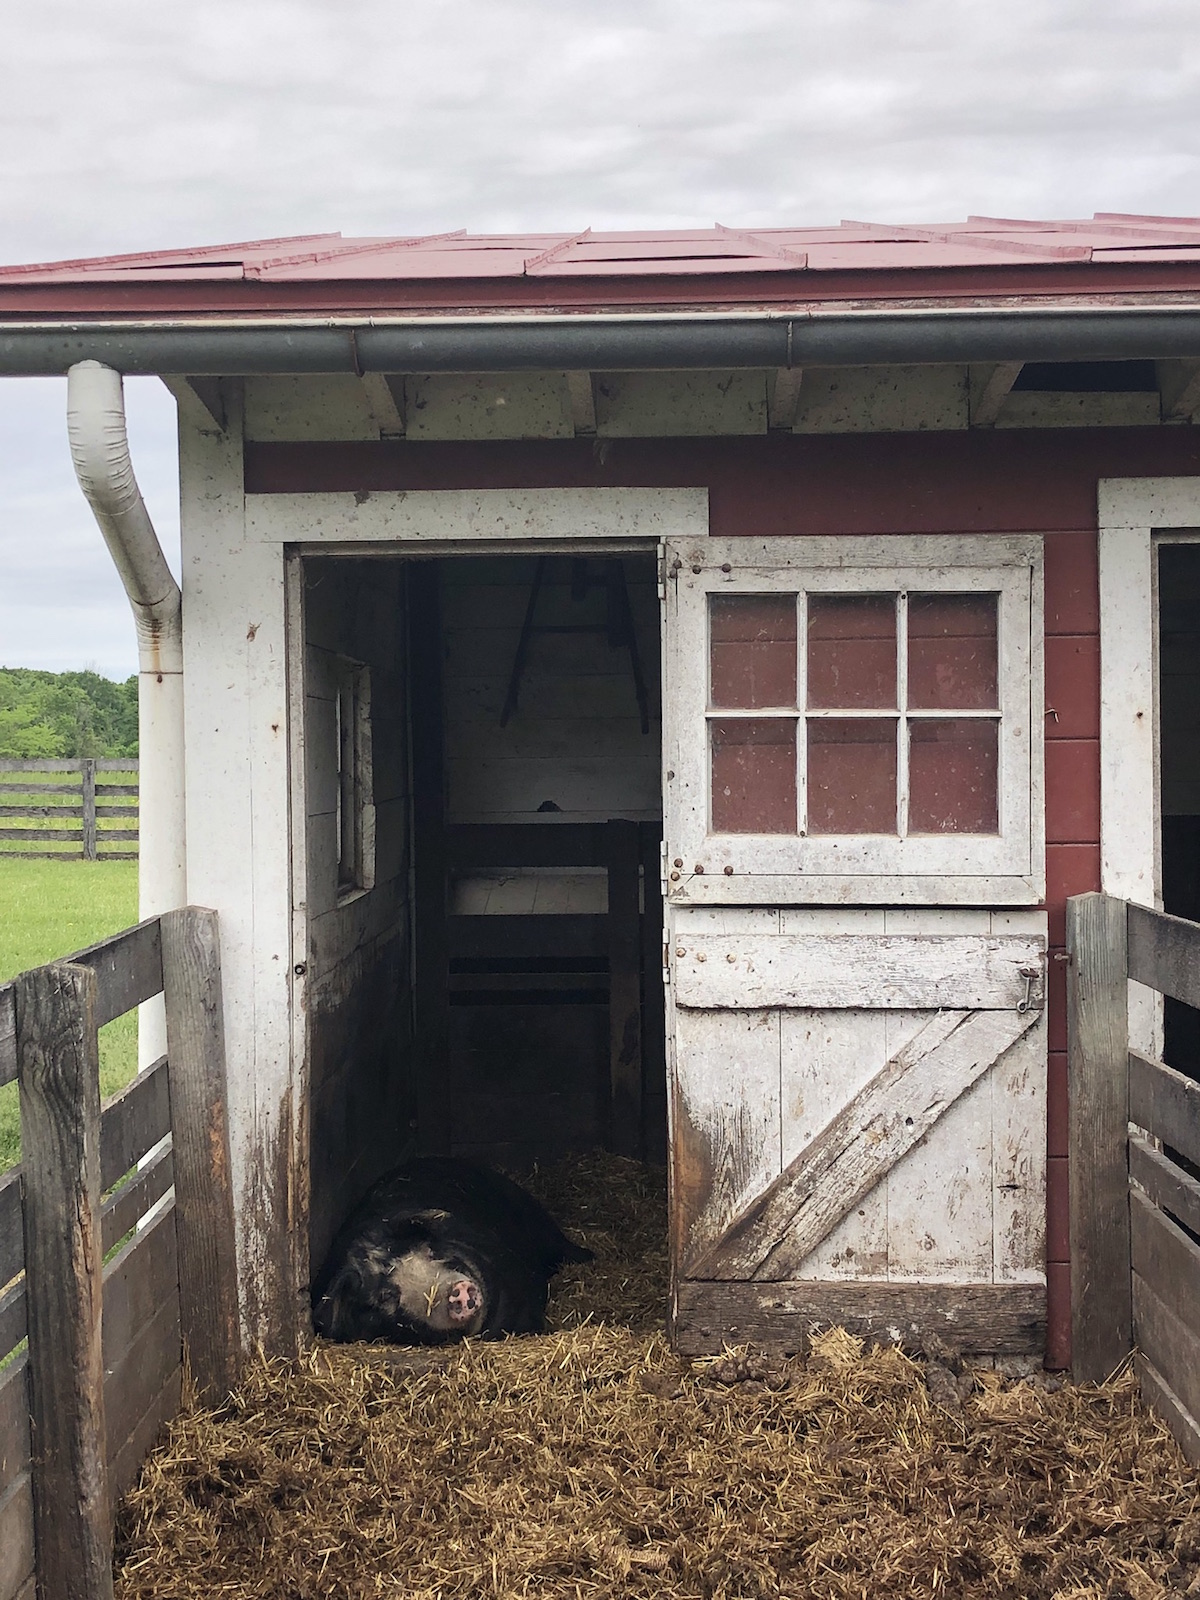 A pig lying in the barn at Slate Run Metro Park Farm.